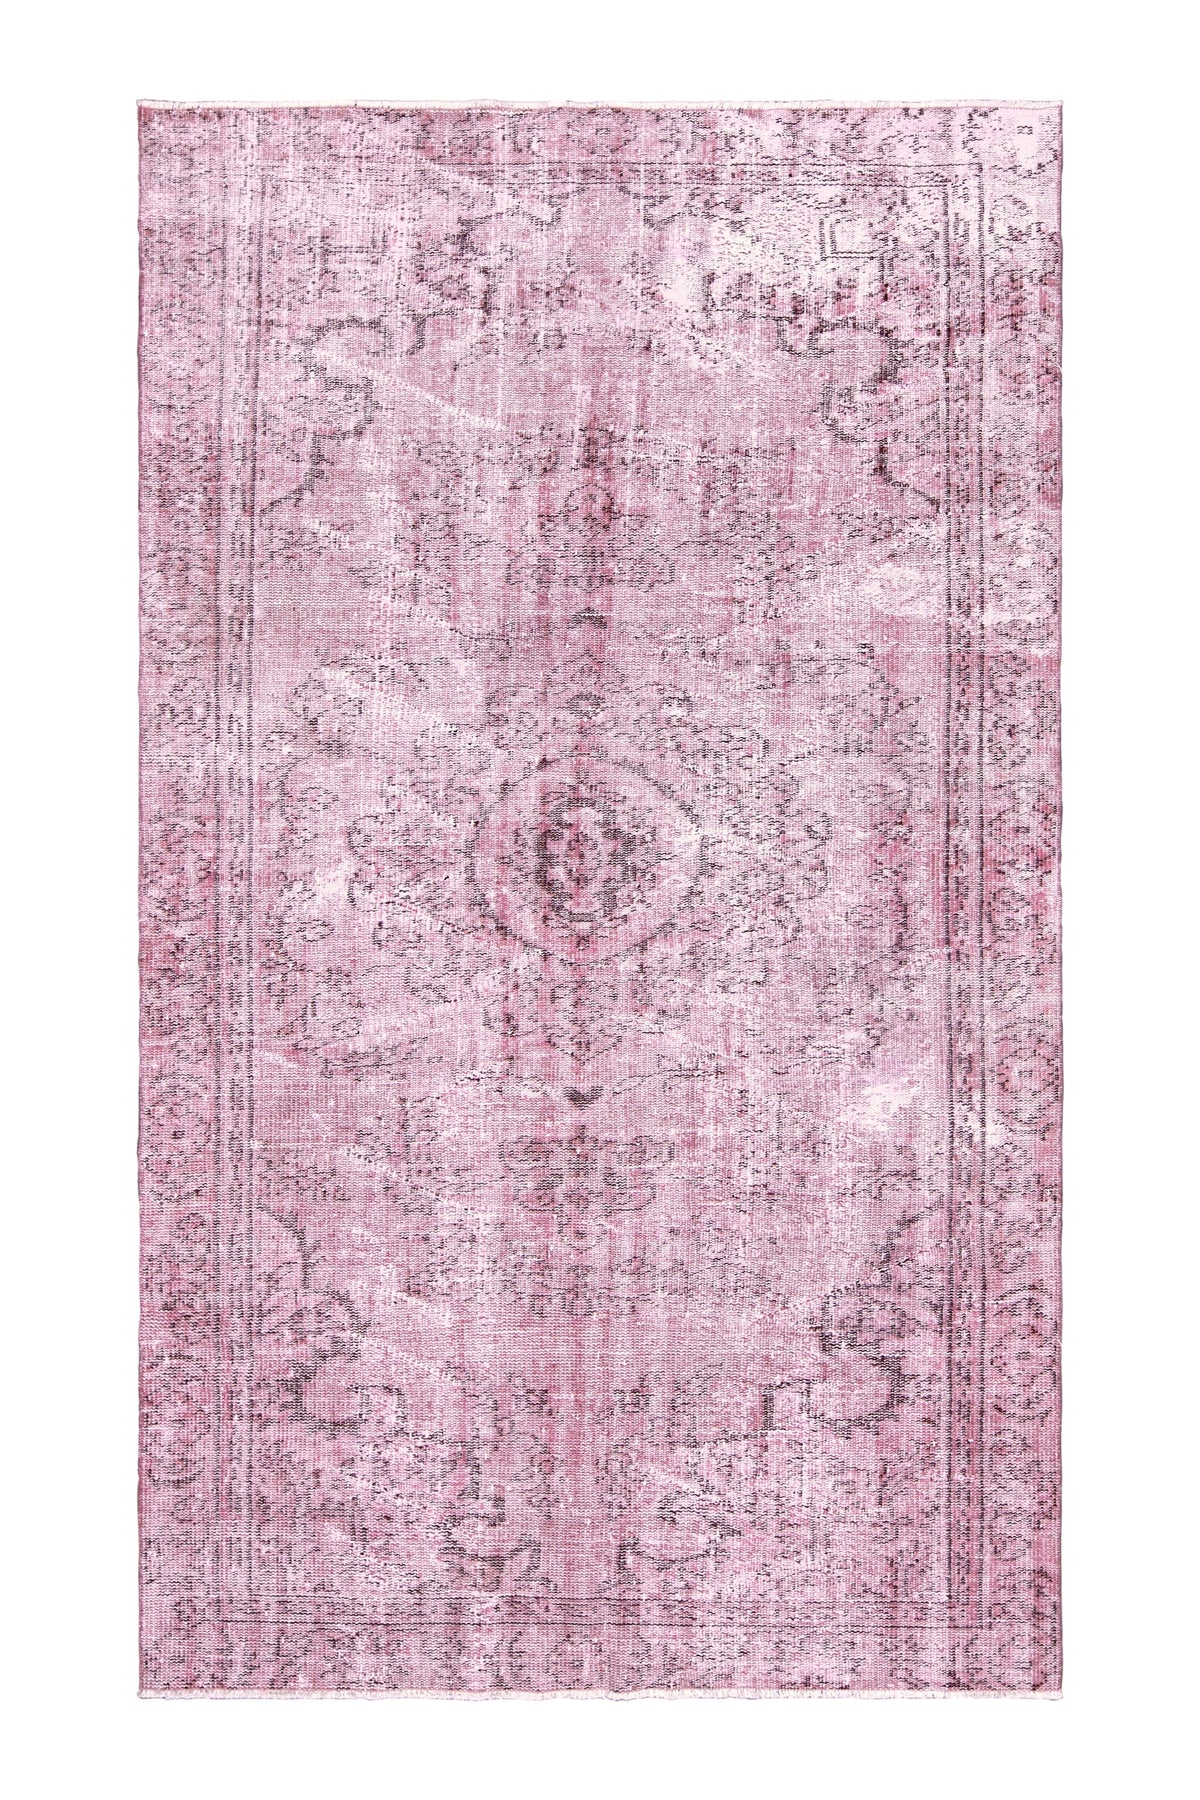 Nafiza - Vintage Pink Overdyed Rug